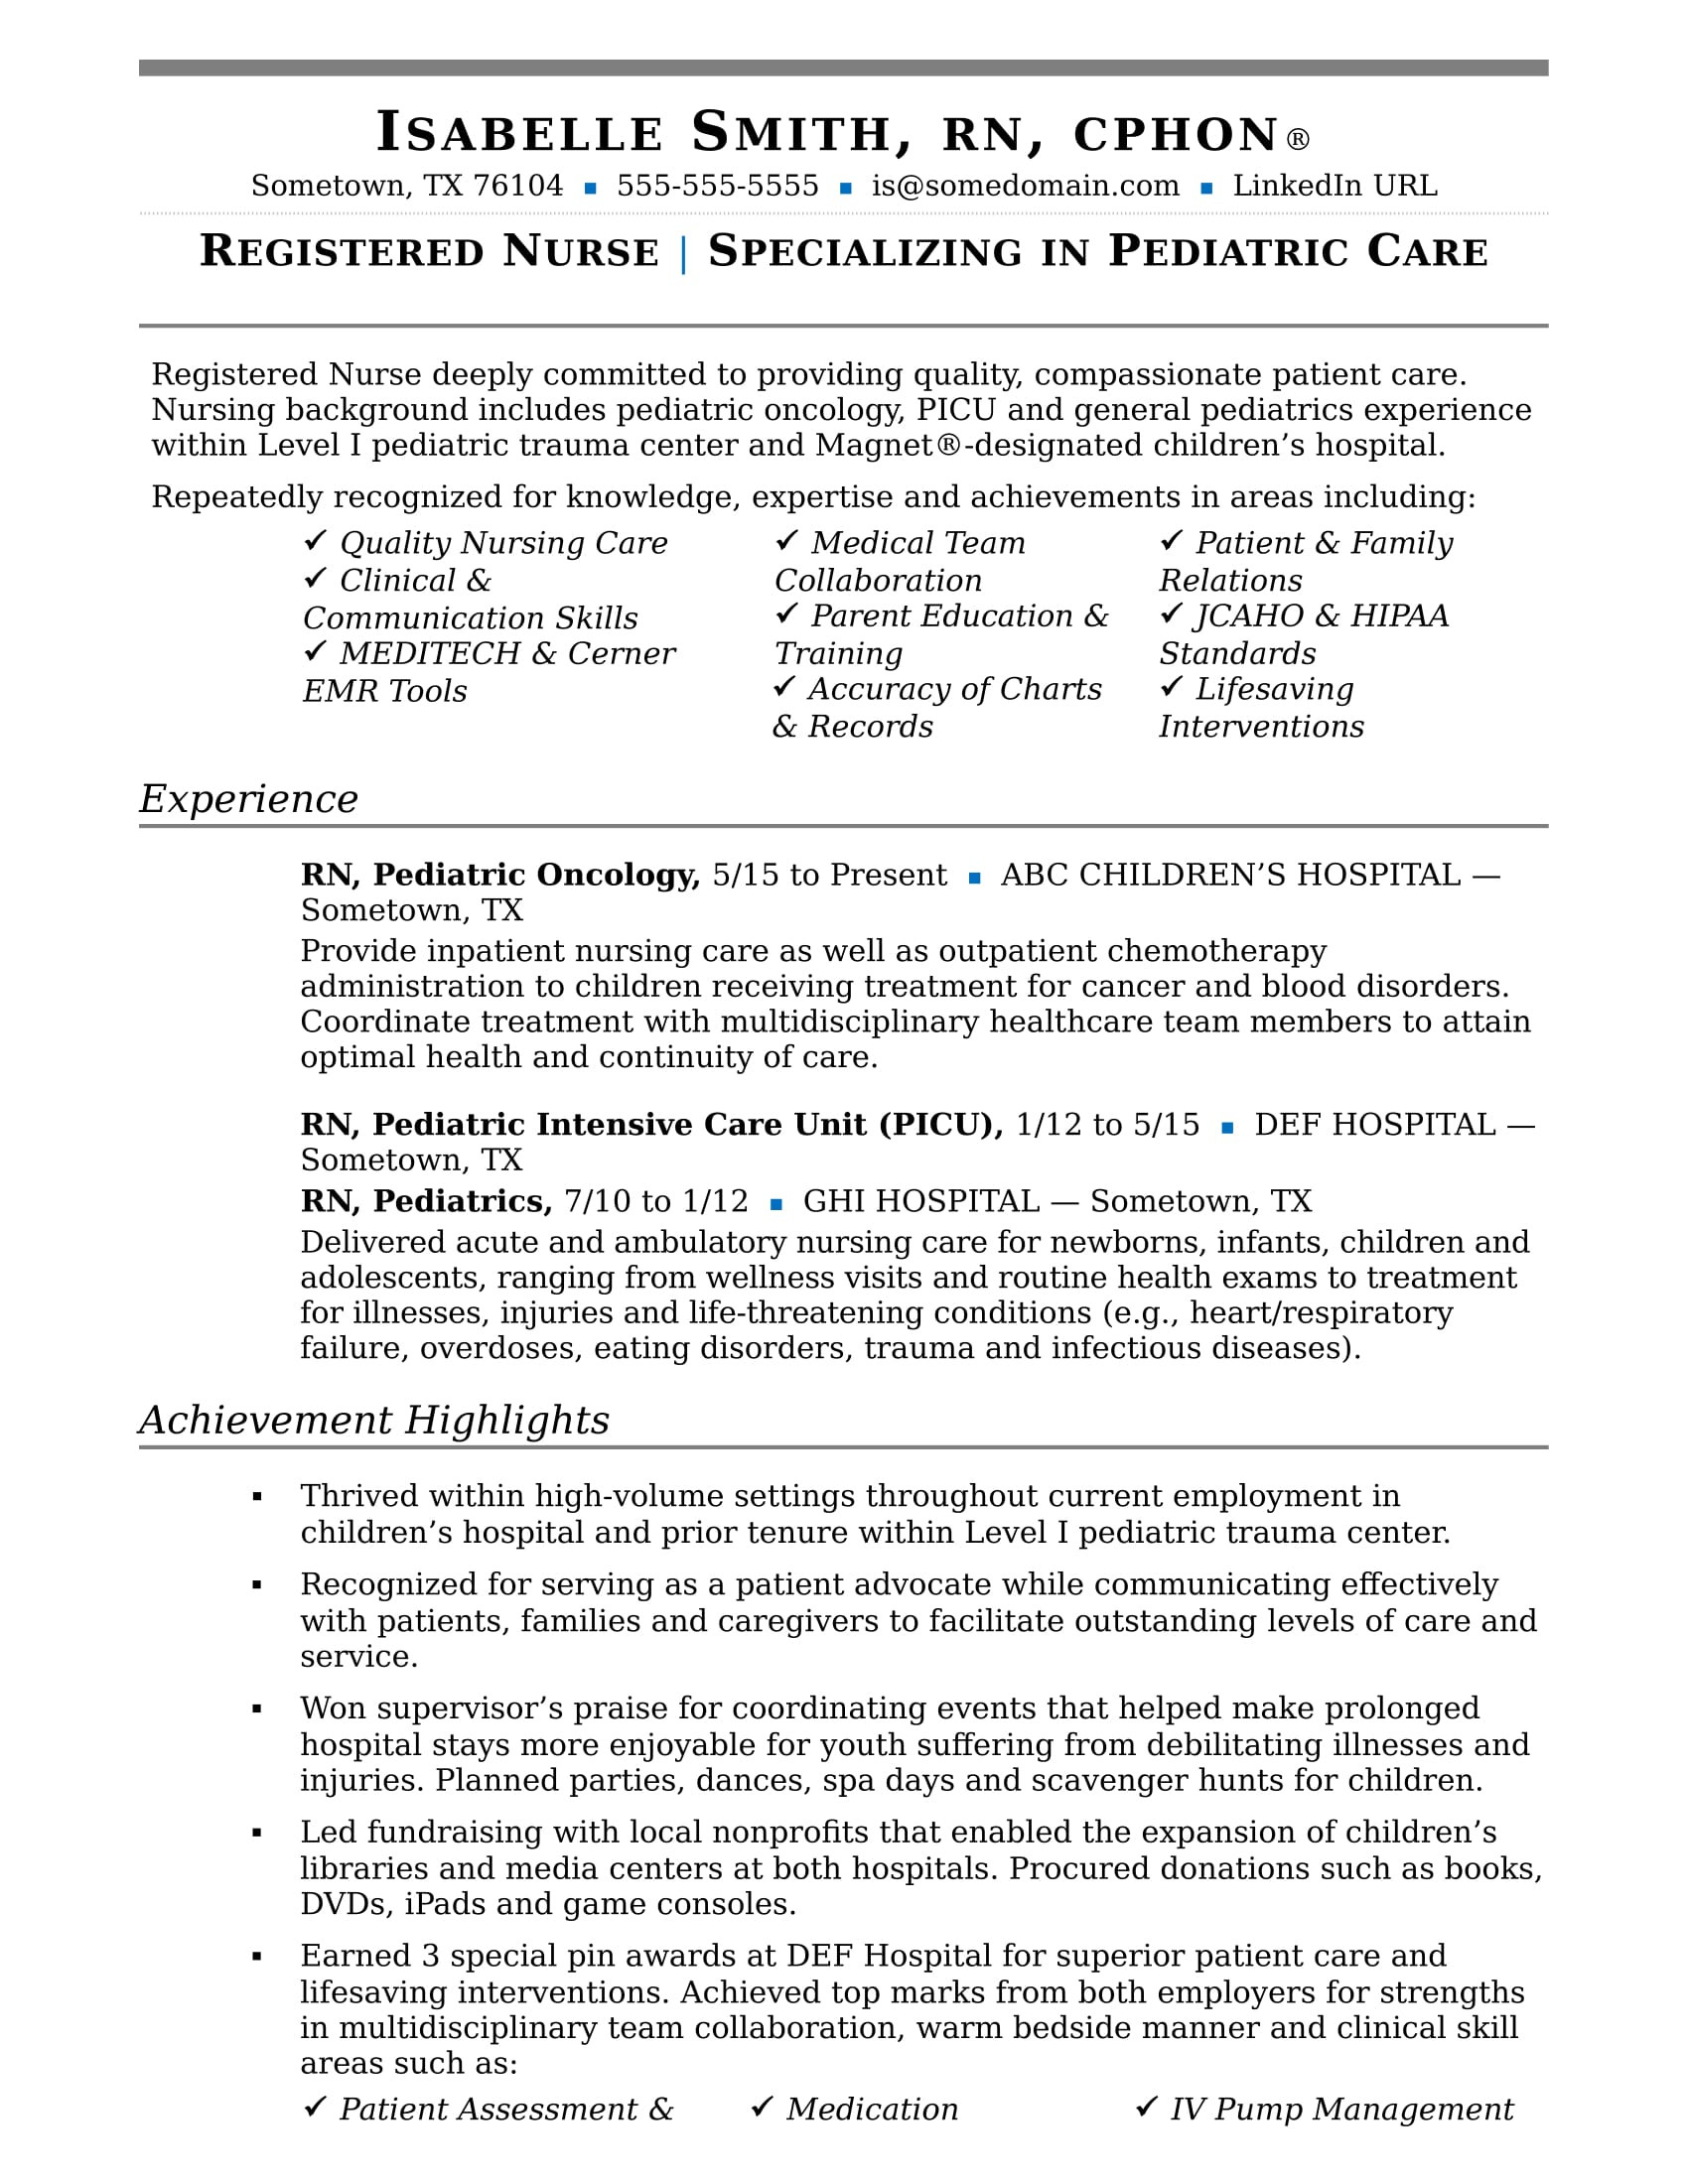 Sample Of A Good Resume for Nurses Nurse Resume Sample Monster.com